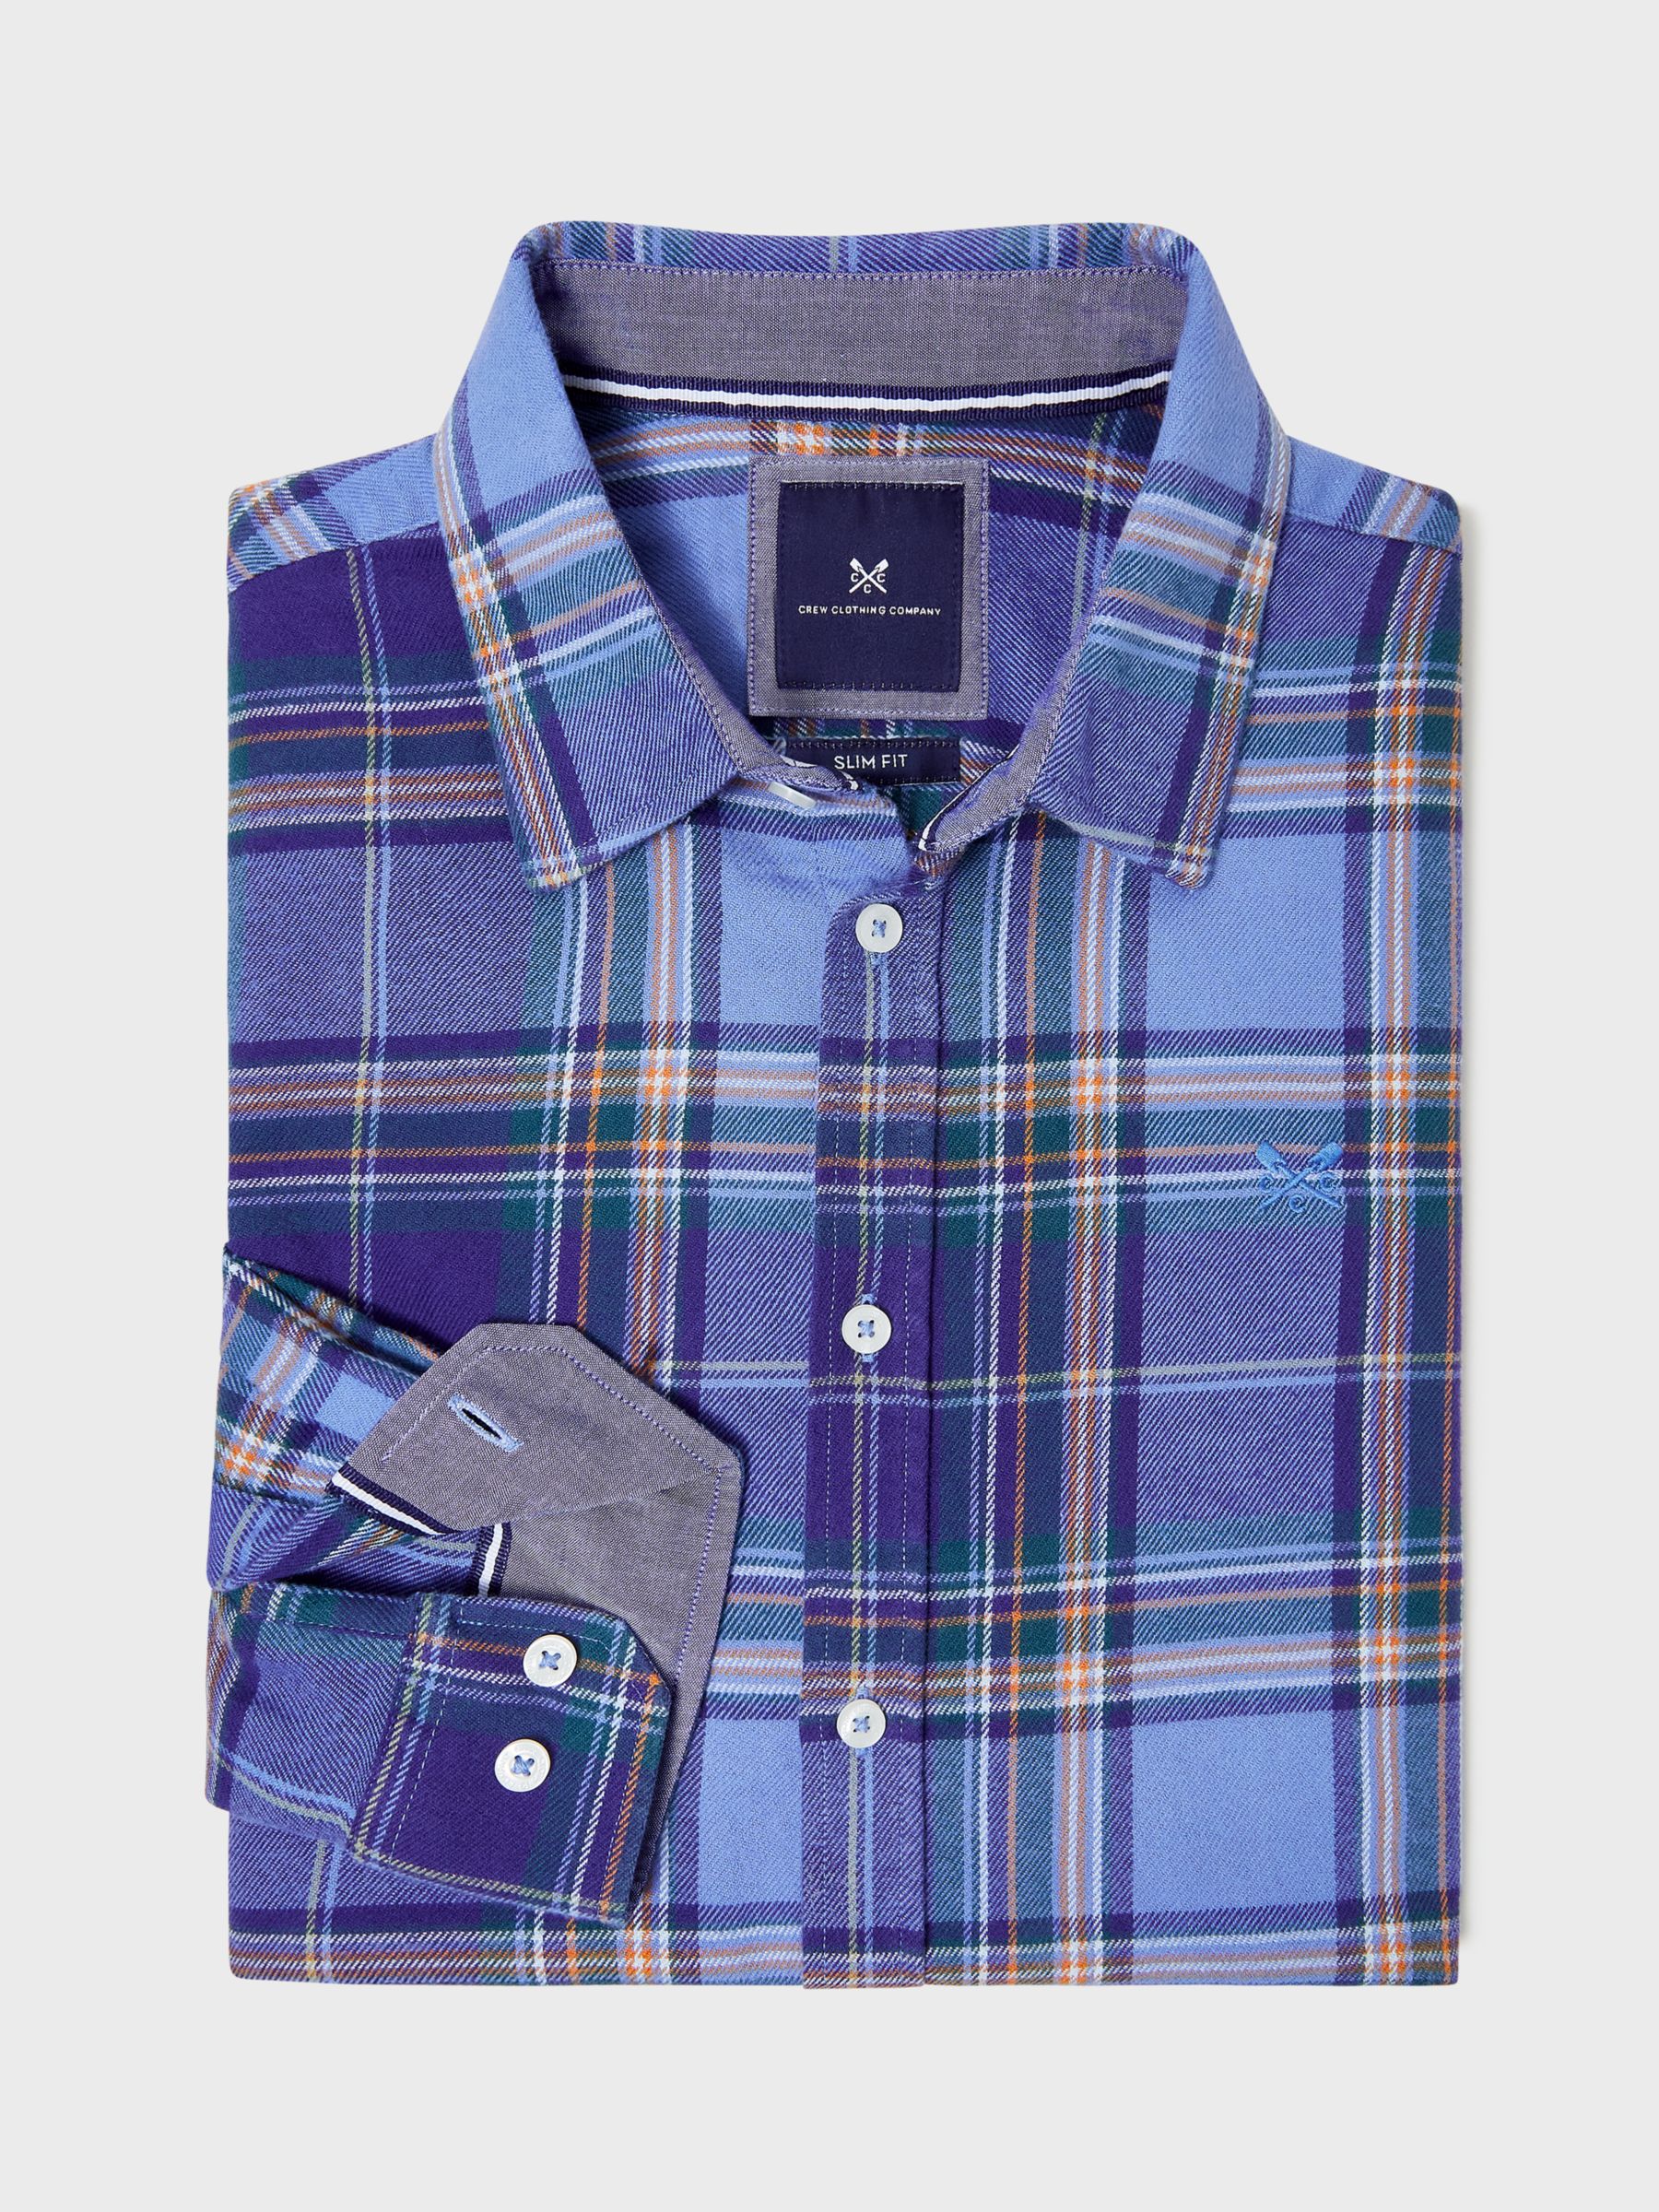 Crew Clothing Kipling Flannel Shirt, Blue/Multi at John Lewis & Partners